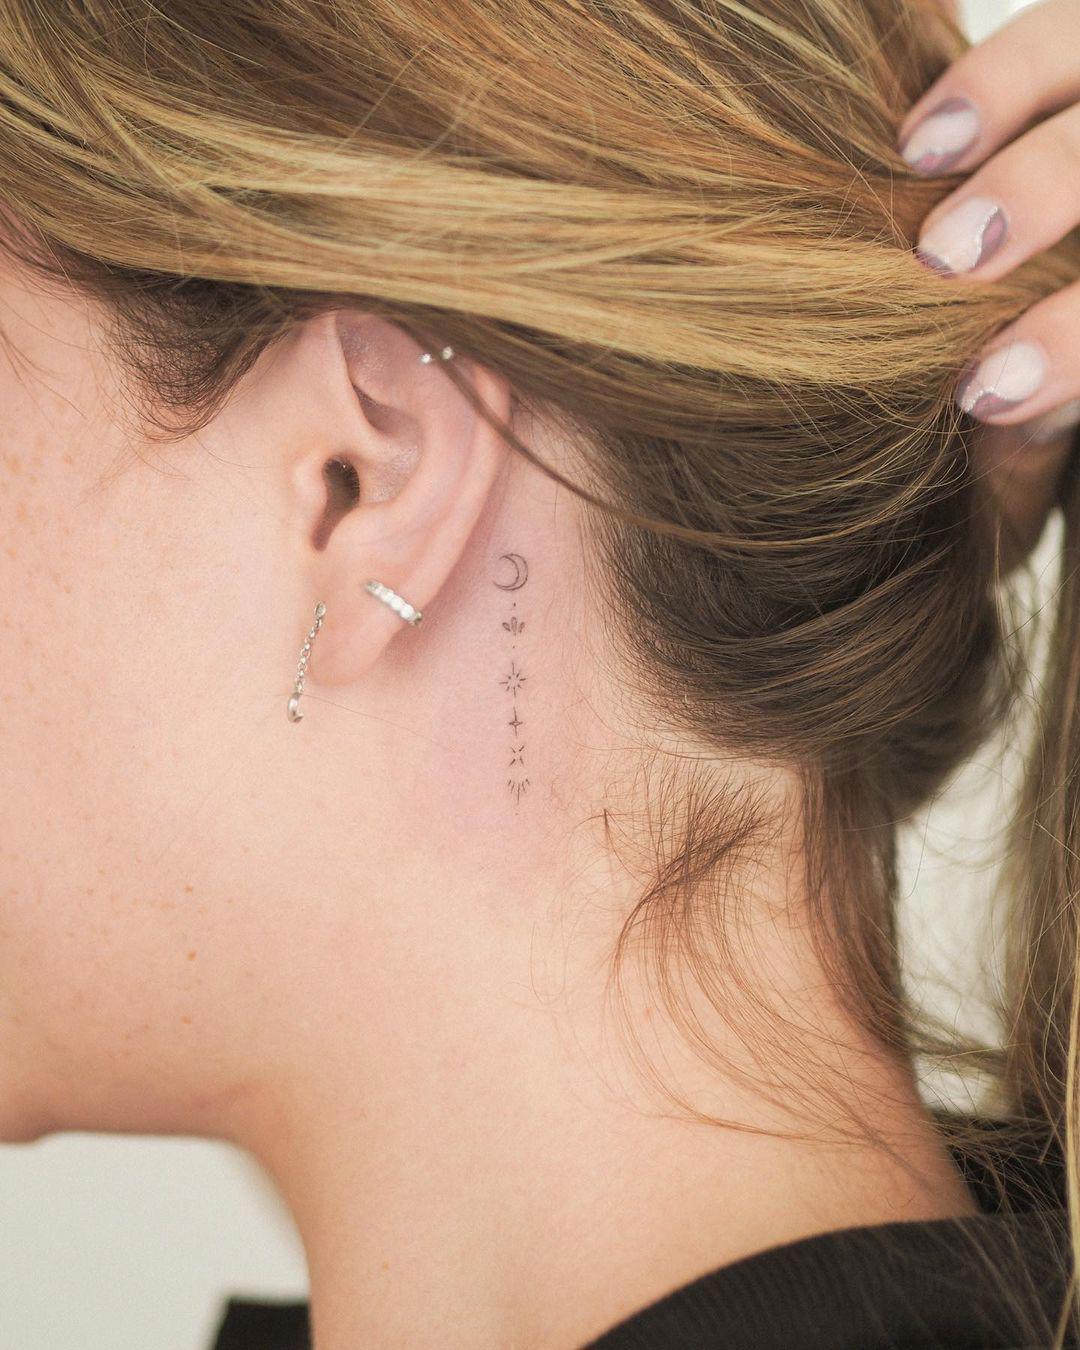 Tatuaje en el cuello de símbolos paralelos a la oreja